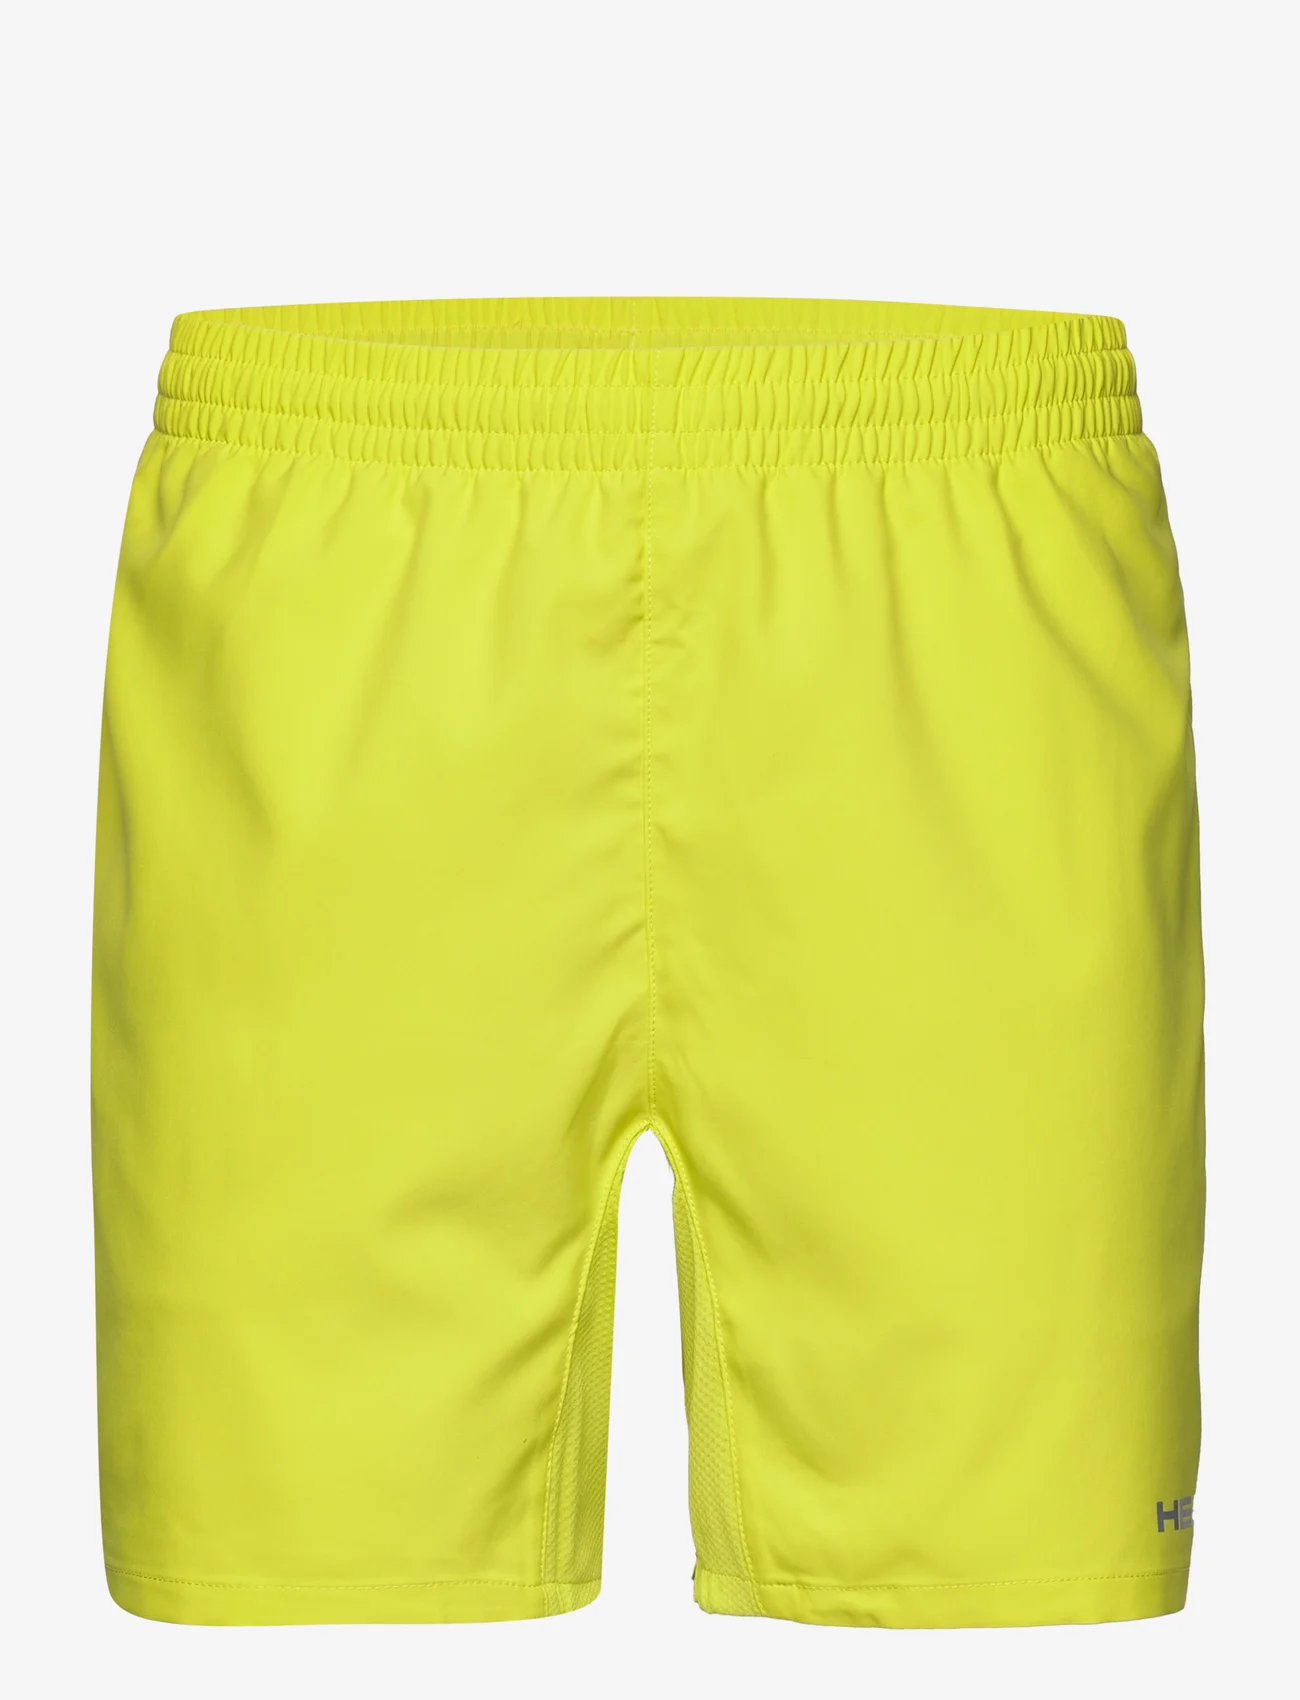 Head - CLUB Shorts Men - sportsshorts - yellow - 0